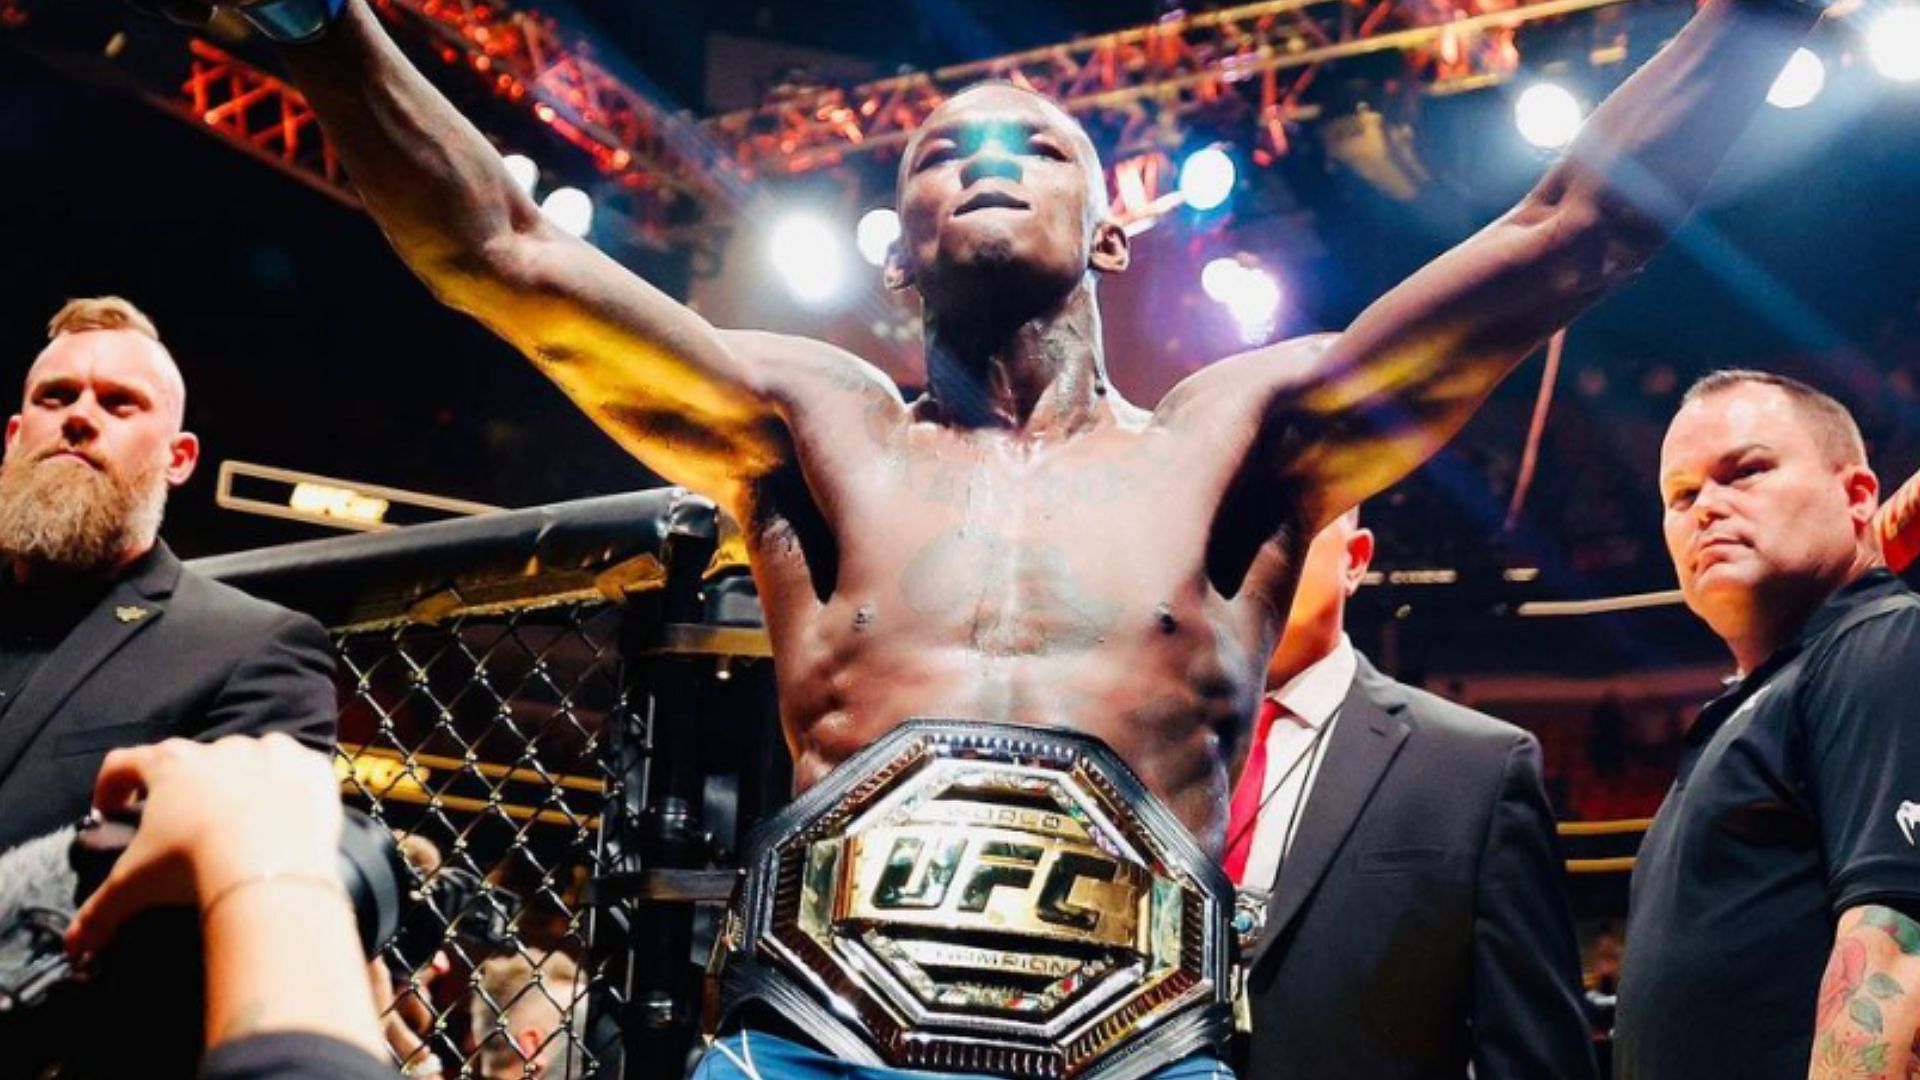 Israel Adesanya: Nigeria's UFC champion details 'Pain is my friend